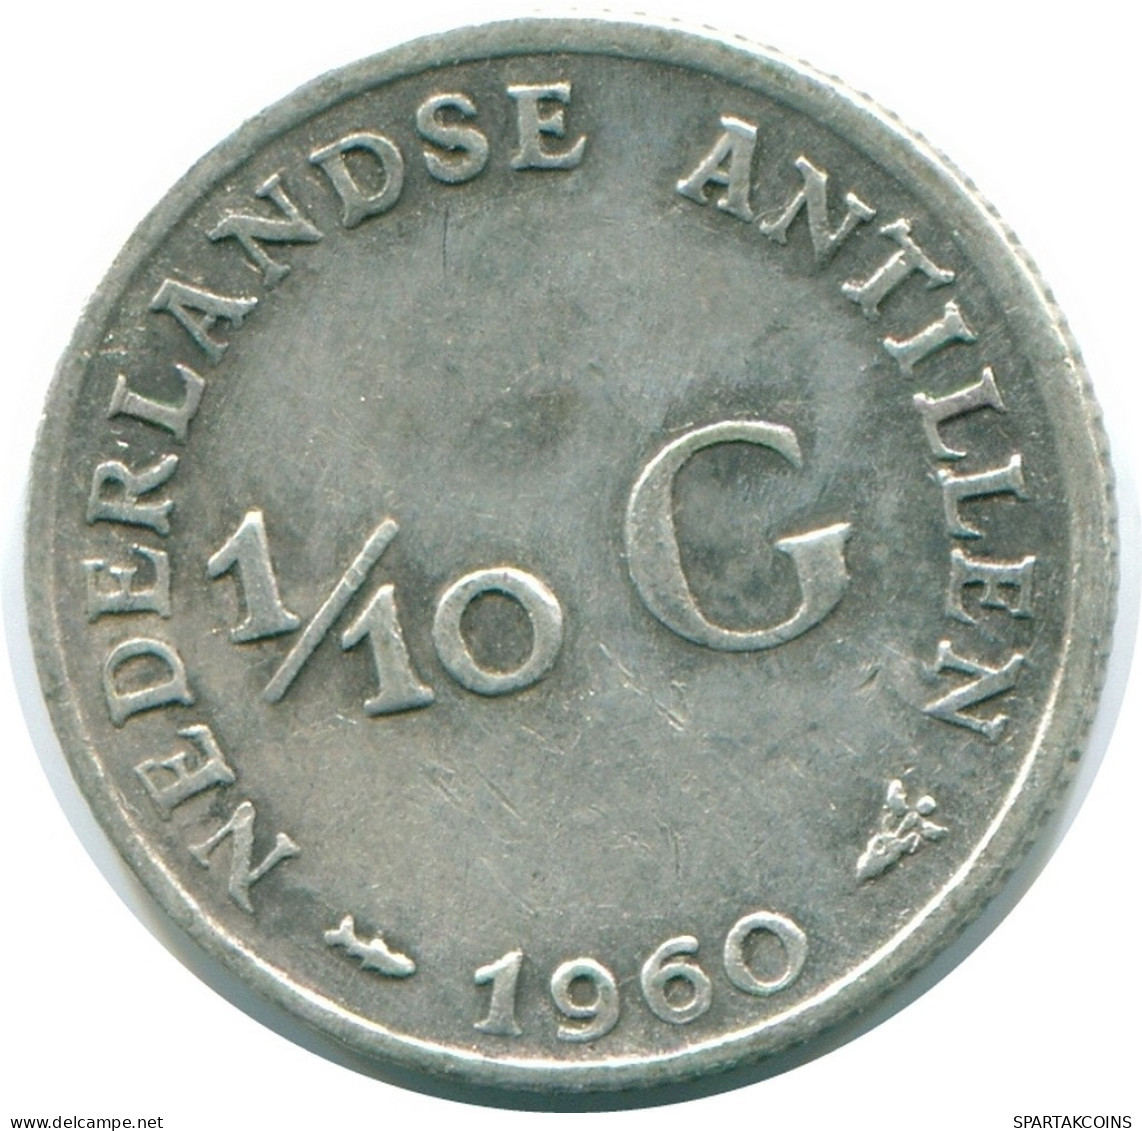 1/10 GULDEN 1960 NETHERLANDS ANTILLES SILVER Colonial Coin #NL12275.3.U.A - Netherlands Antilles